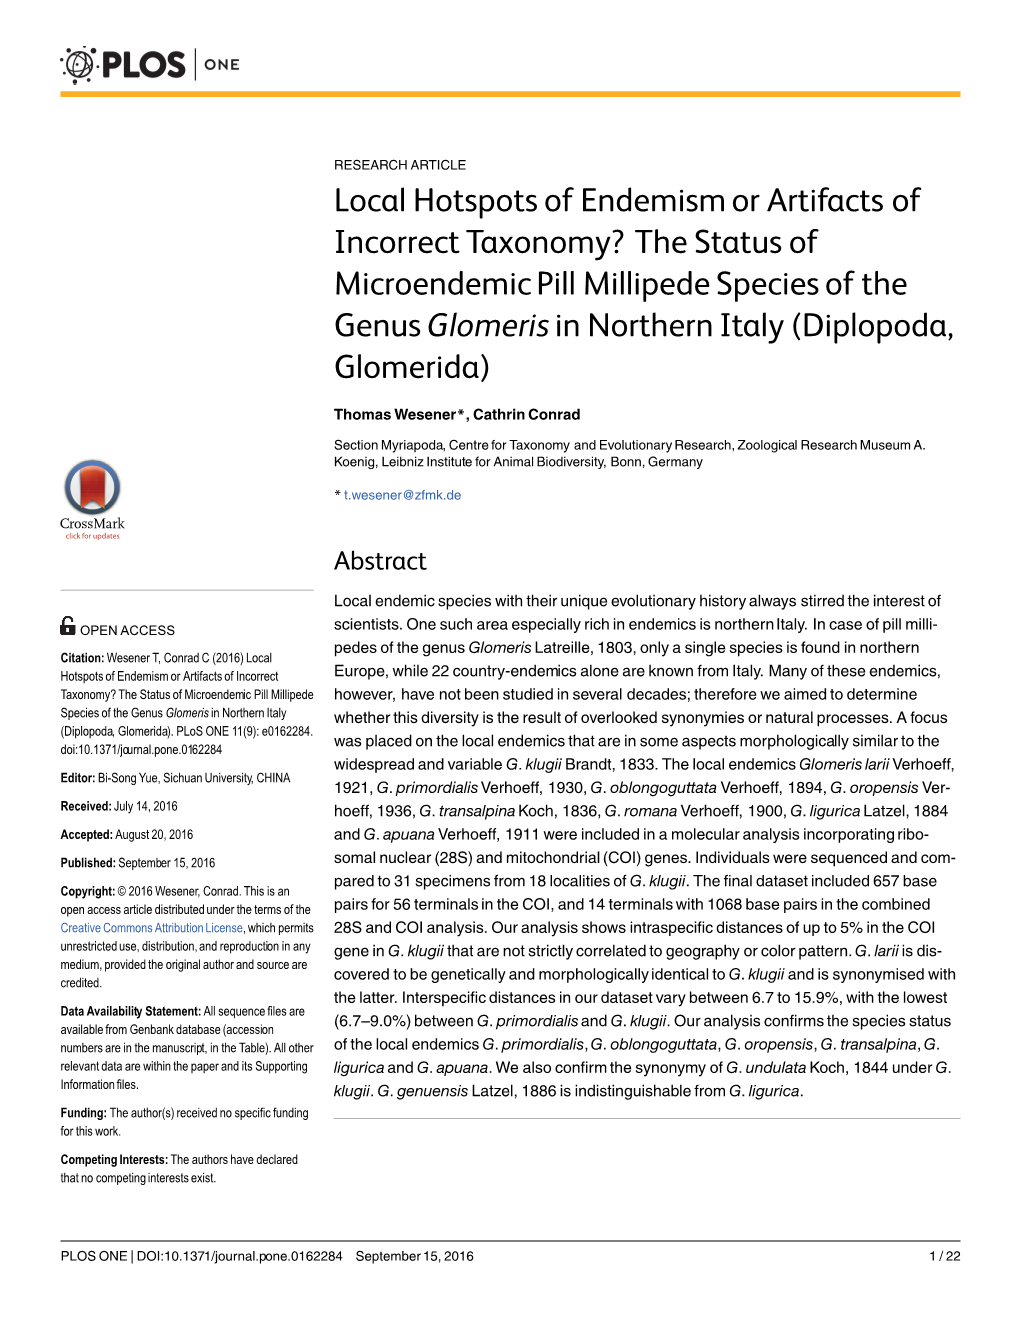 The Status of Microendemic Pill Millipede Species of the Genus Glomeris in Northern Italy (Diplopoda, Glomerida)